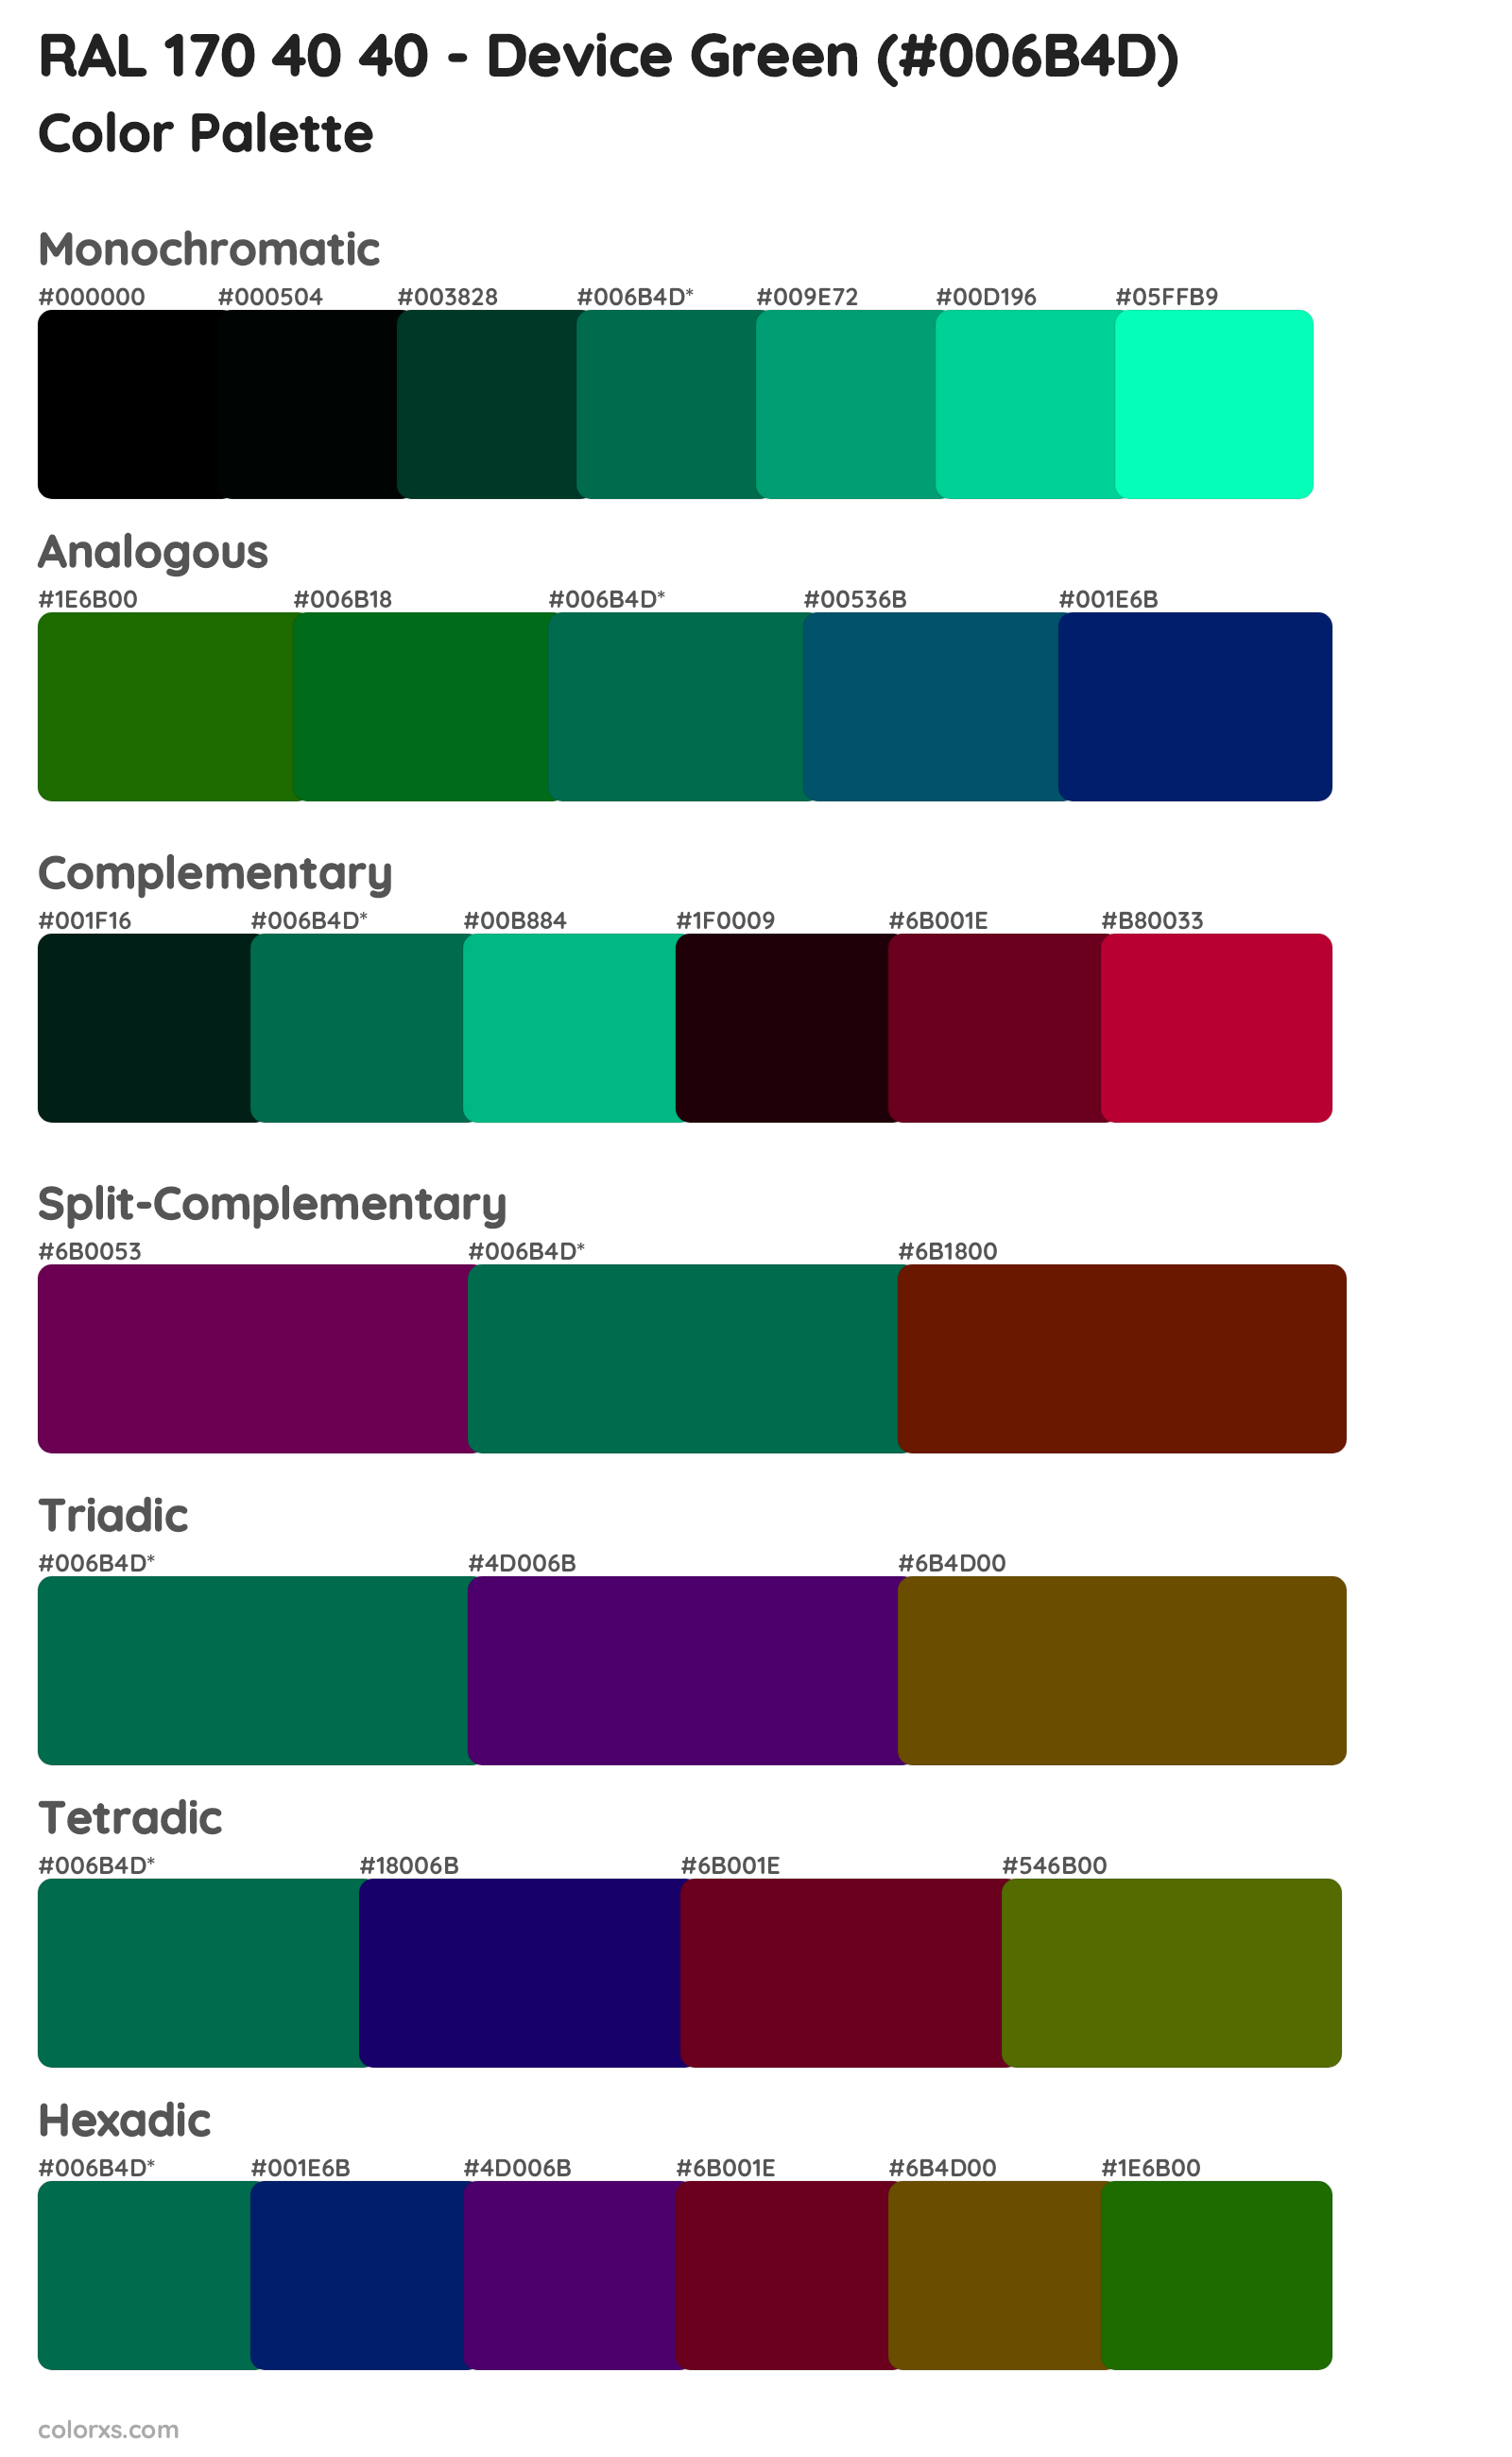 RAL 170 40 40 - Device Green Color Scheme Palettes